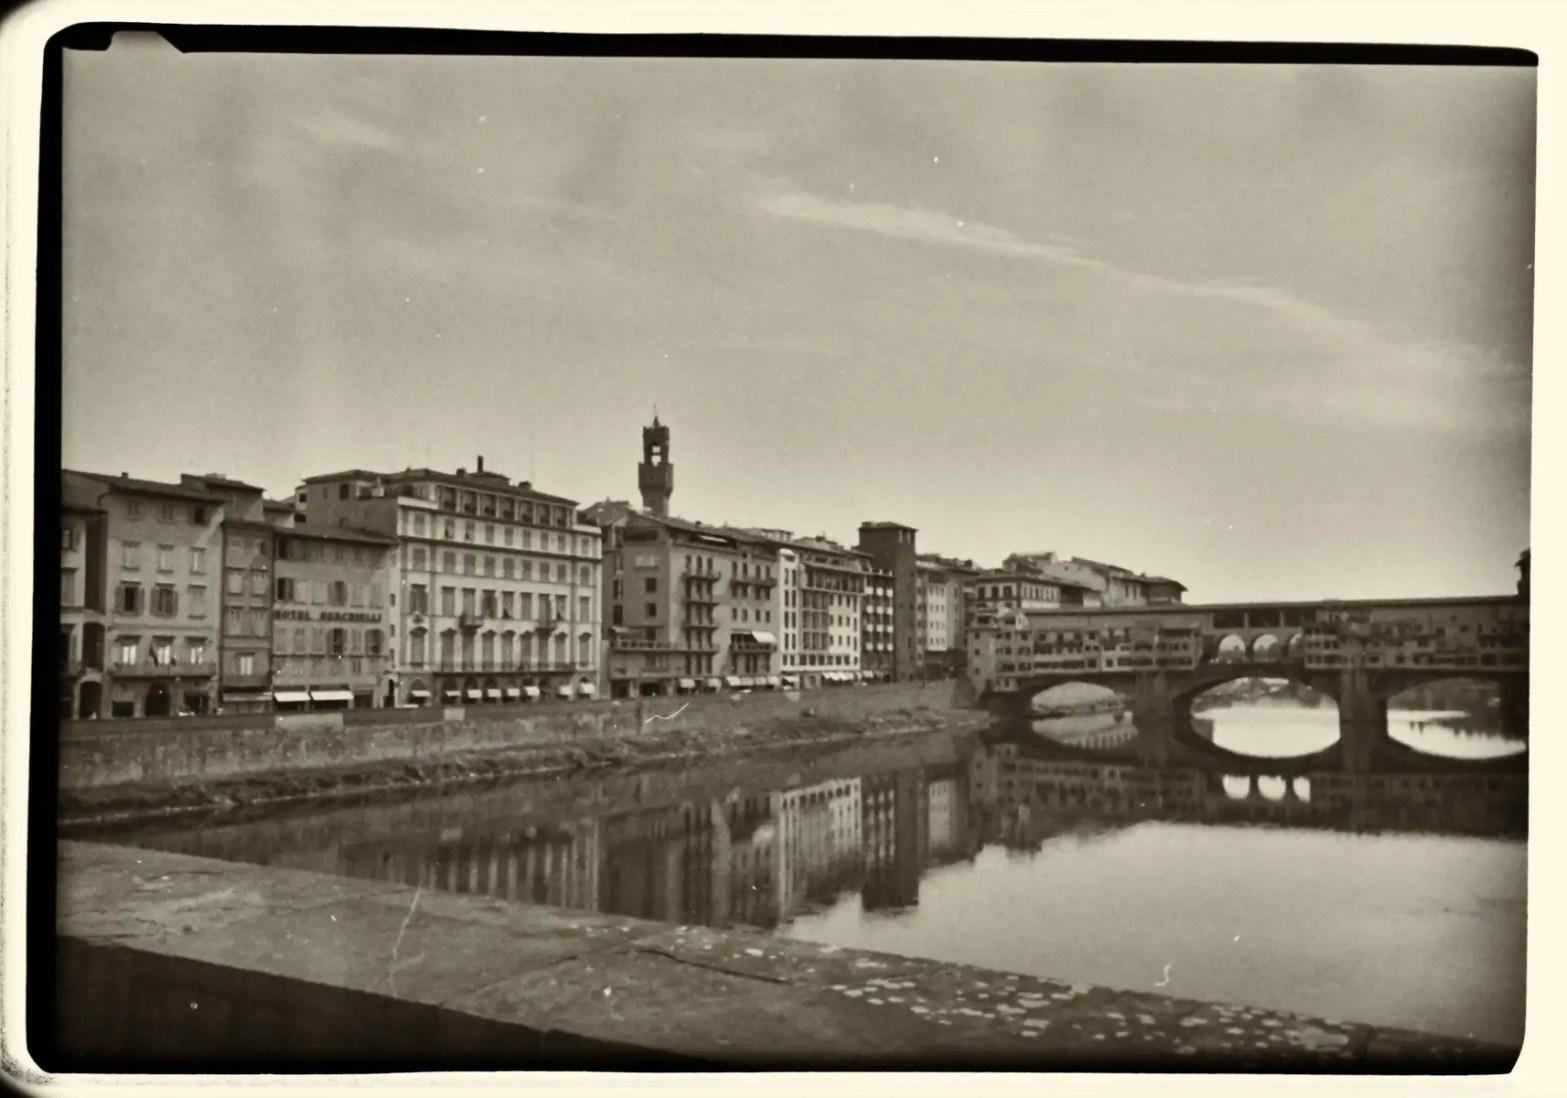 Tower of Pisa - 5 Frames With... Kodak MAX 800 (EI 800 / 35mm format / Kodak HD Disposable) - by Dave Faulkner